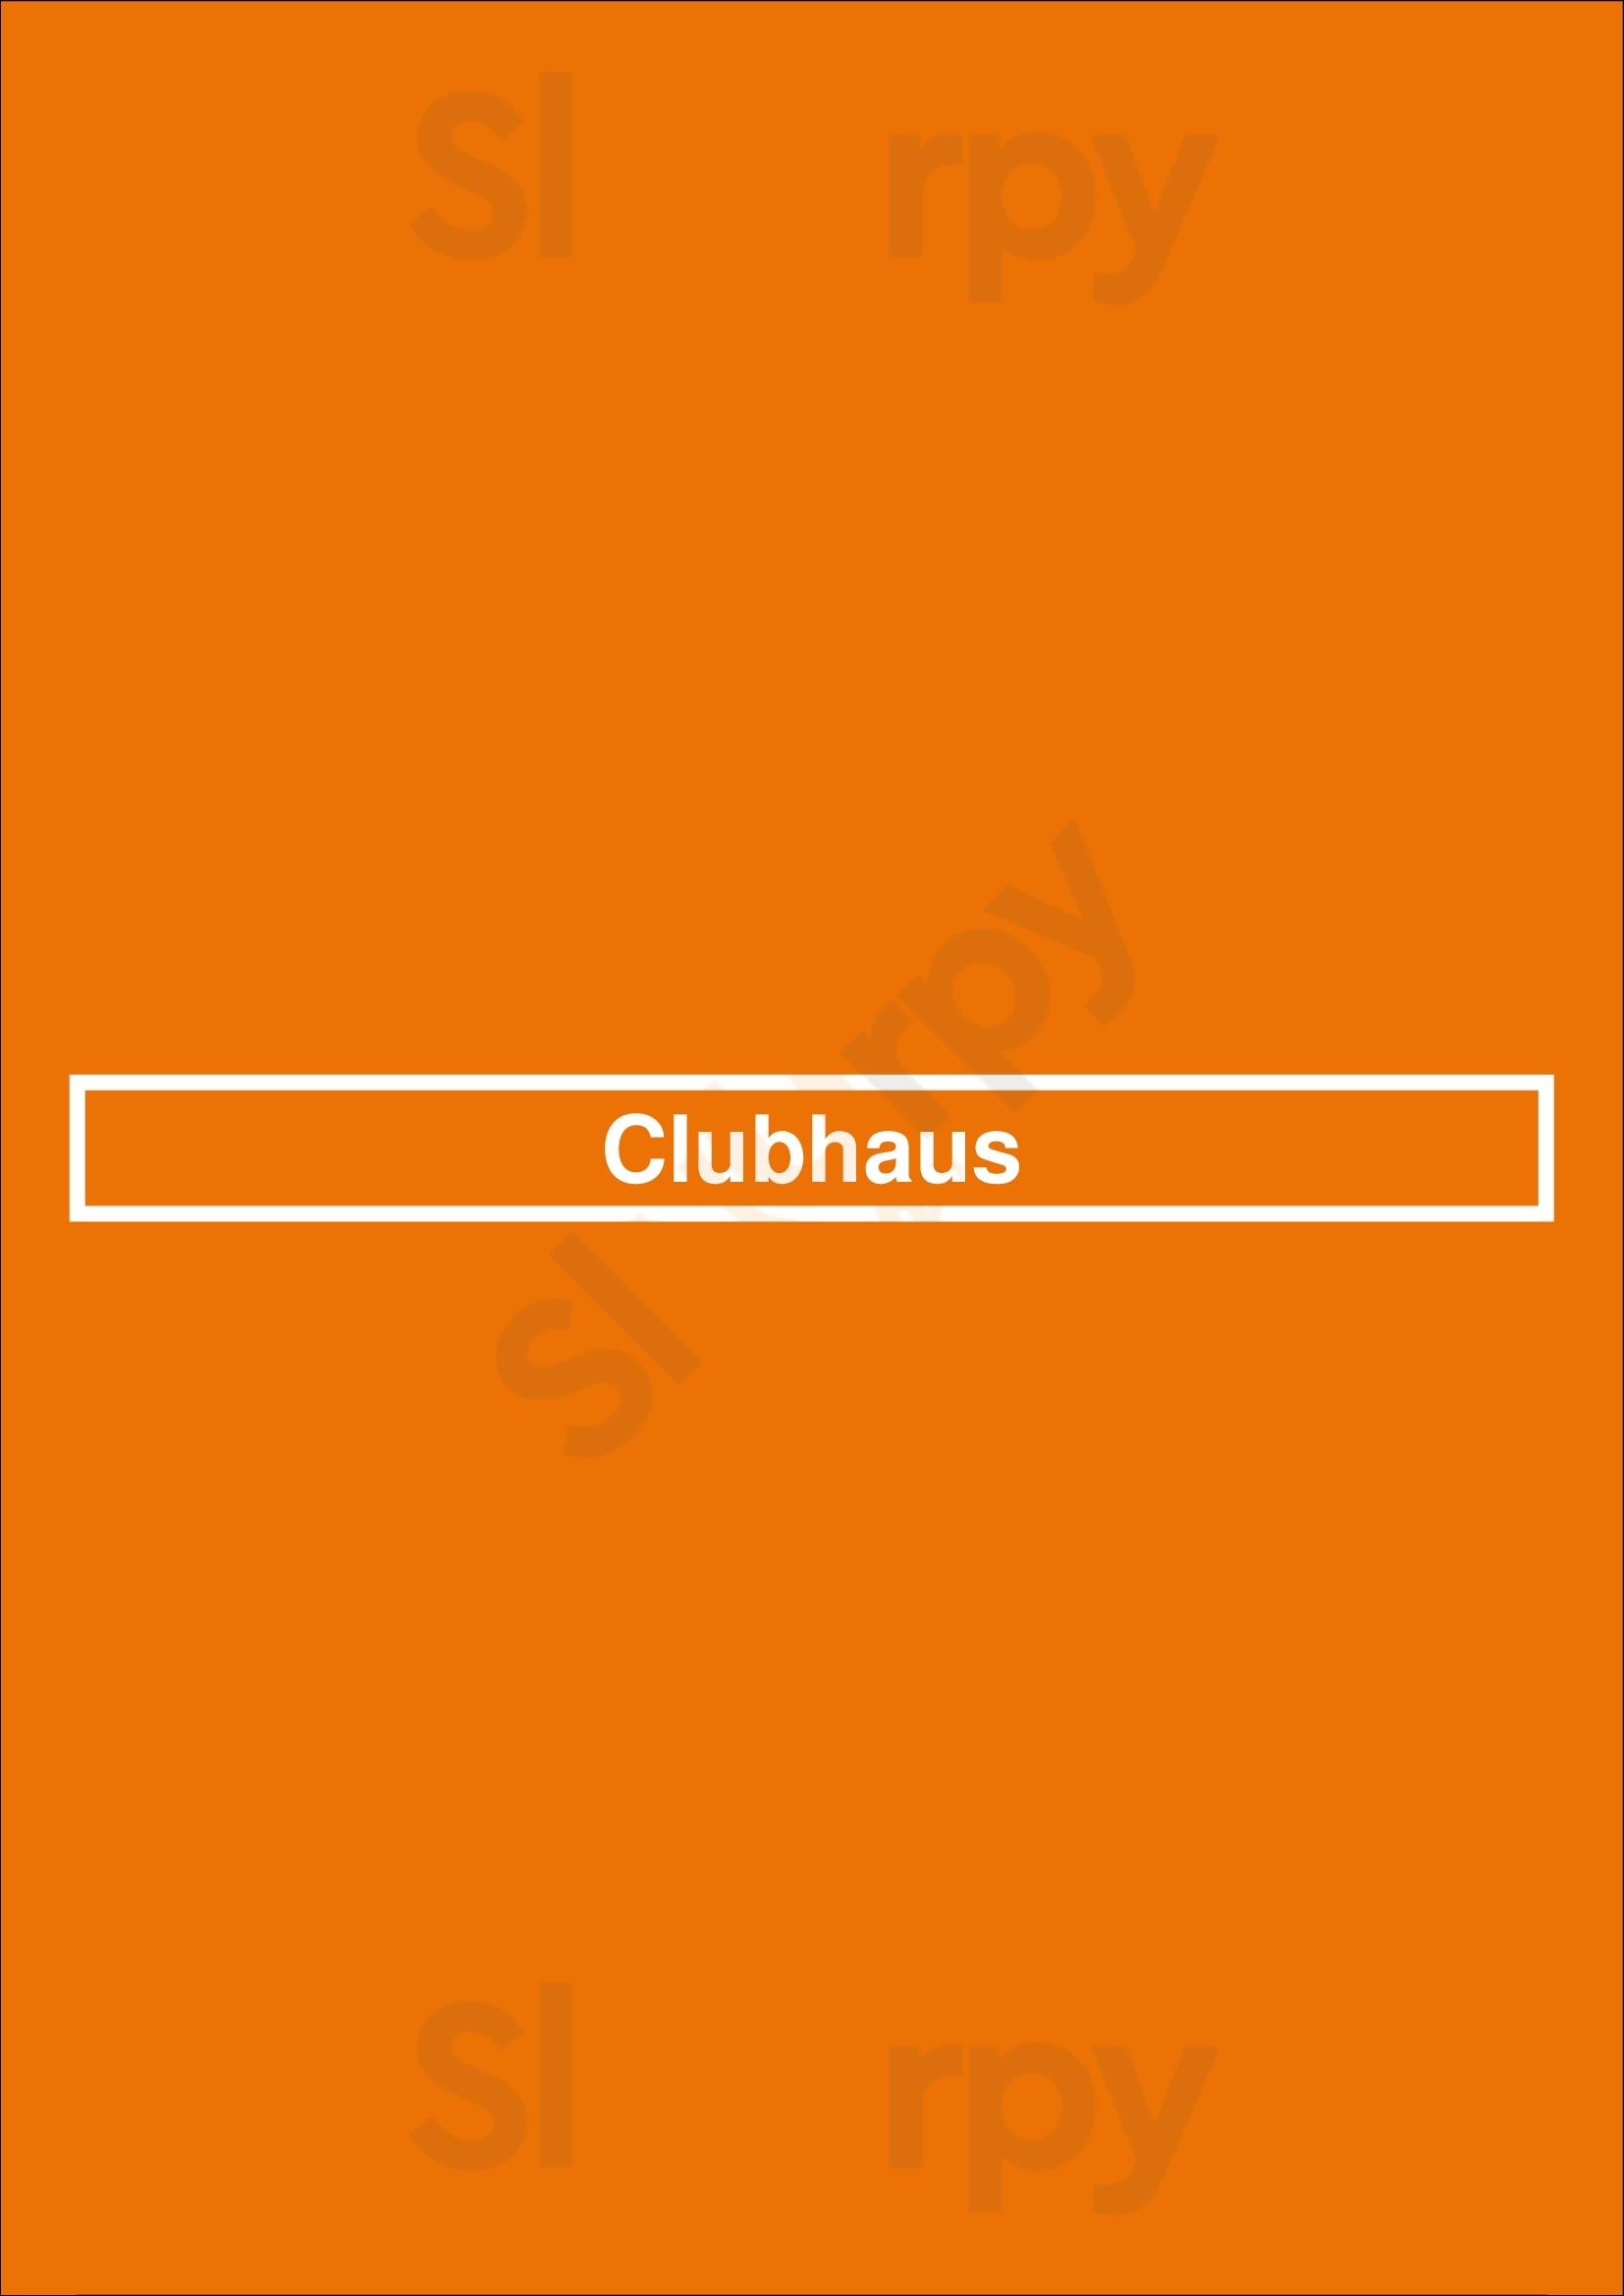 Clubhaus Barcelona Menu - 1